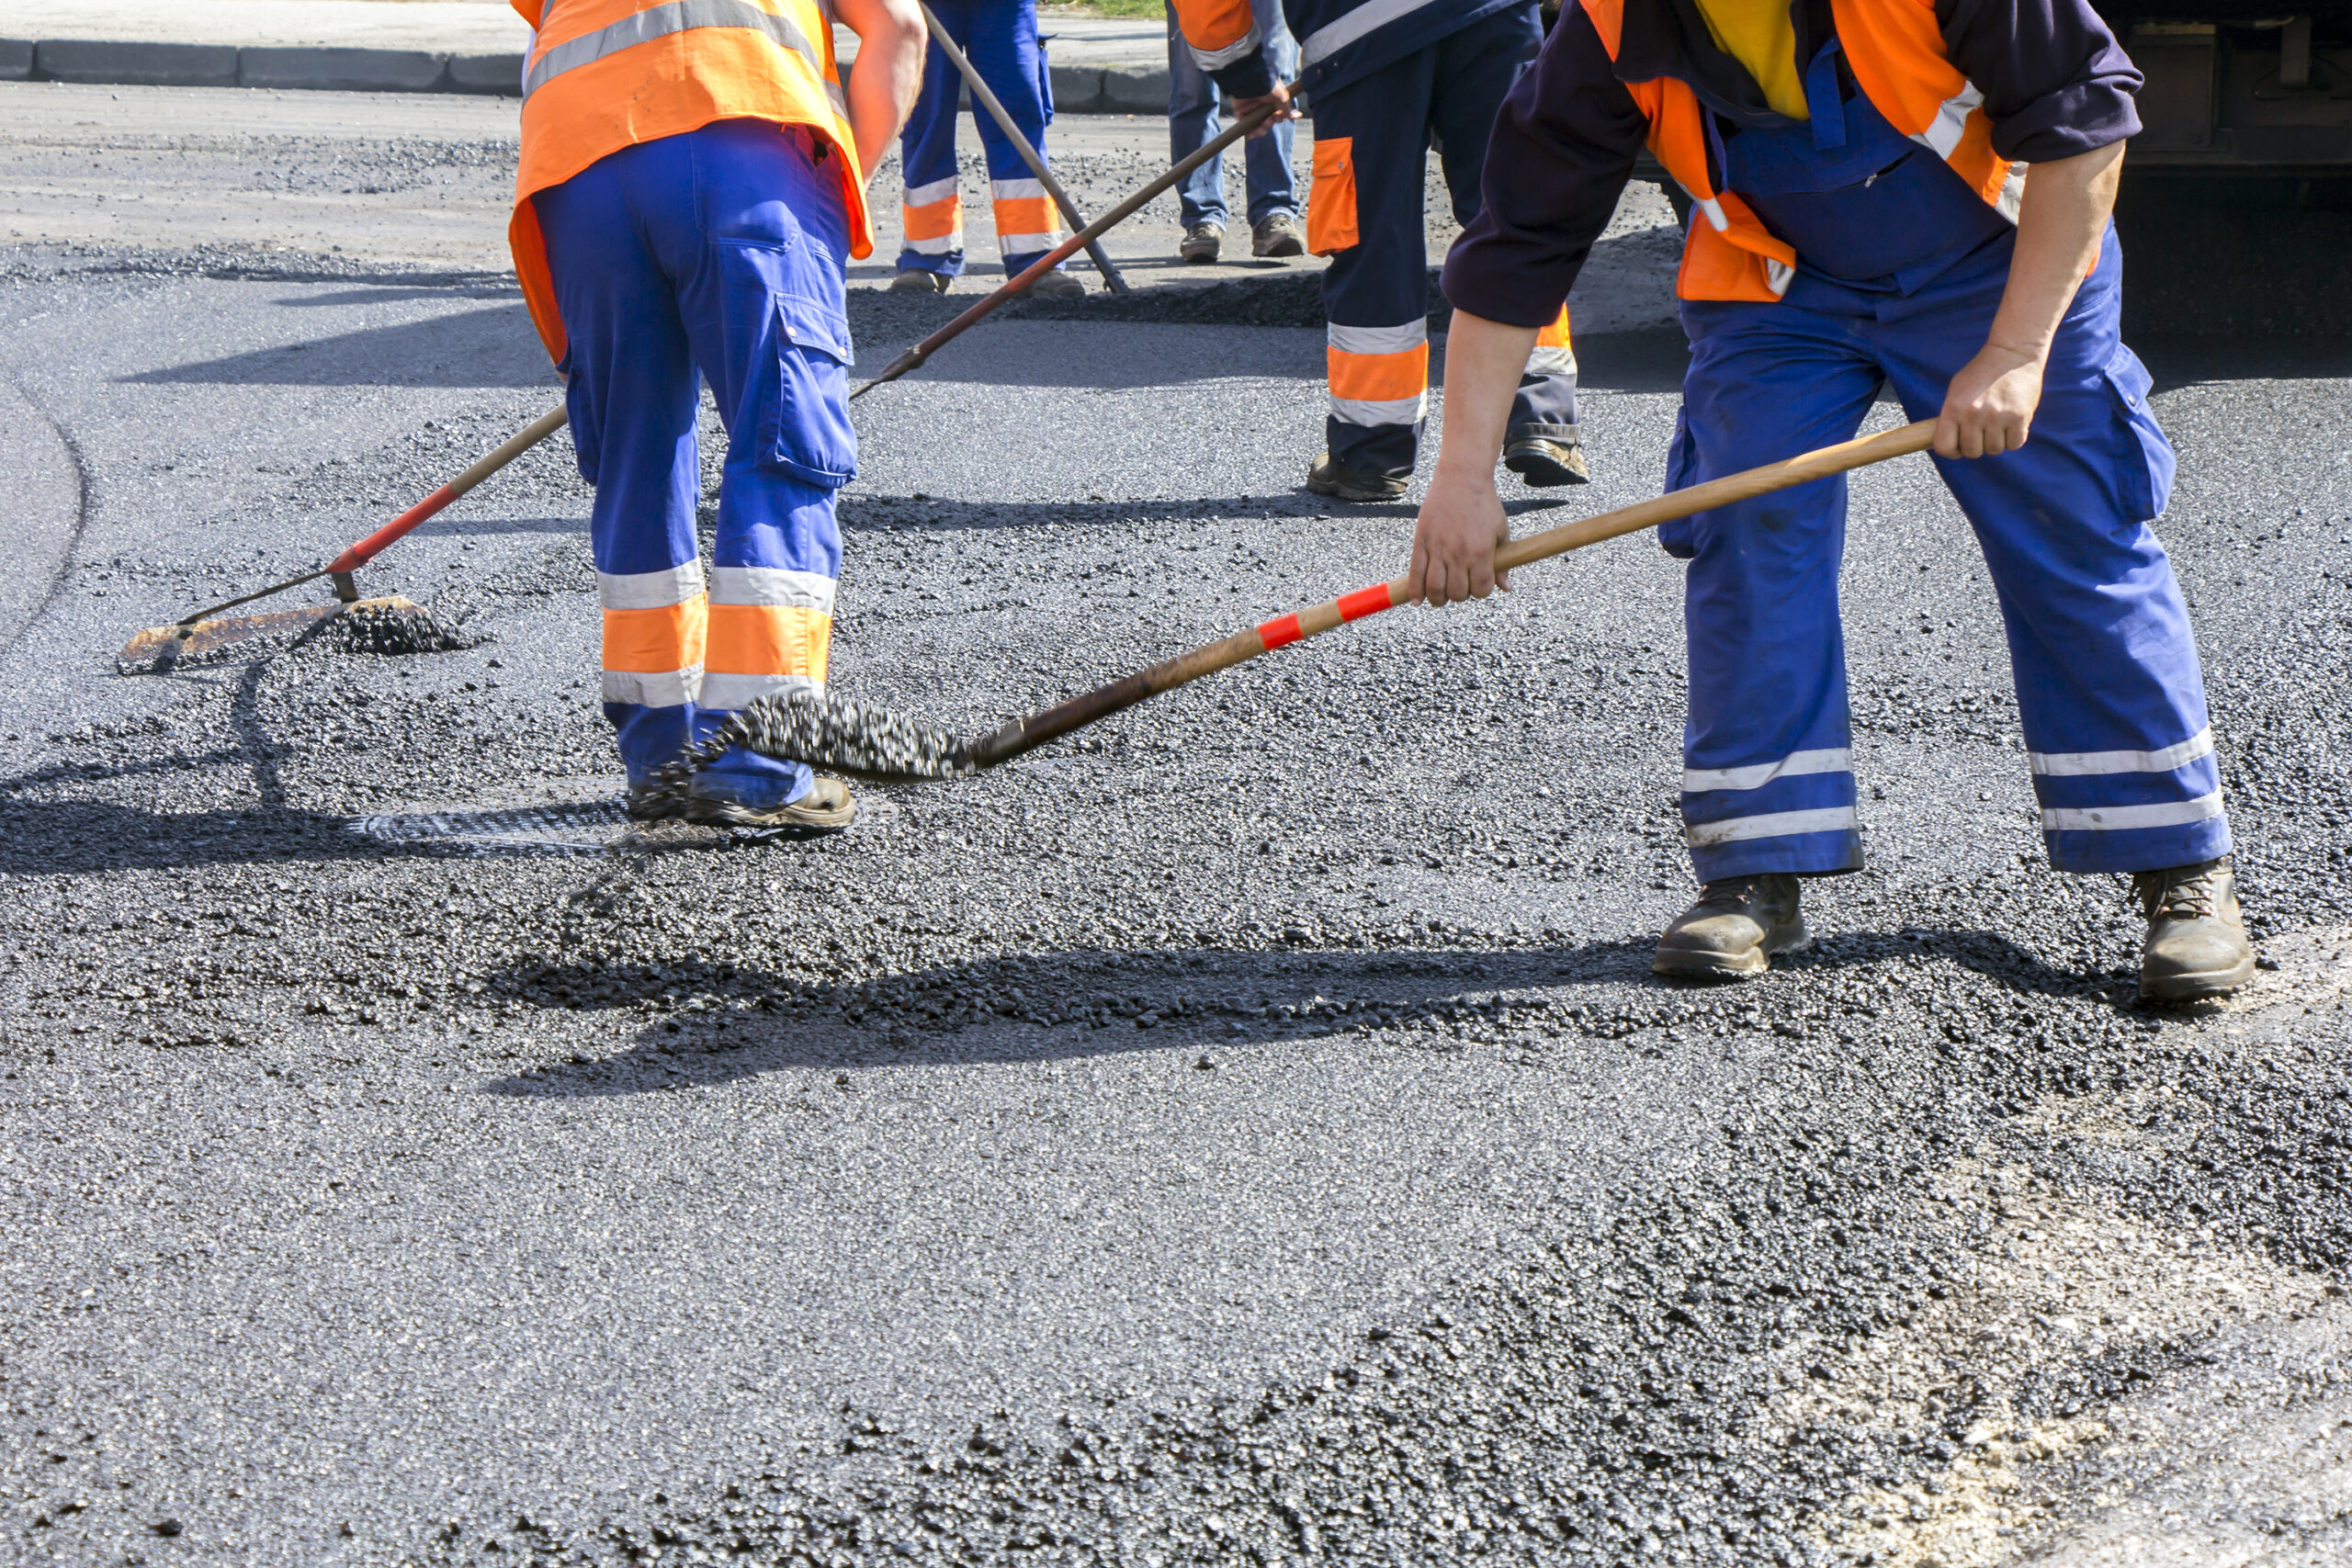 Workers conducting asphalt repair using shovels